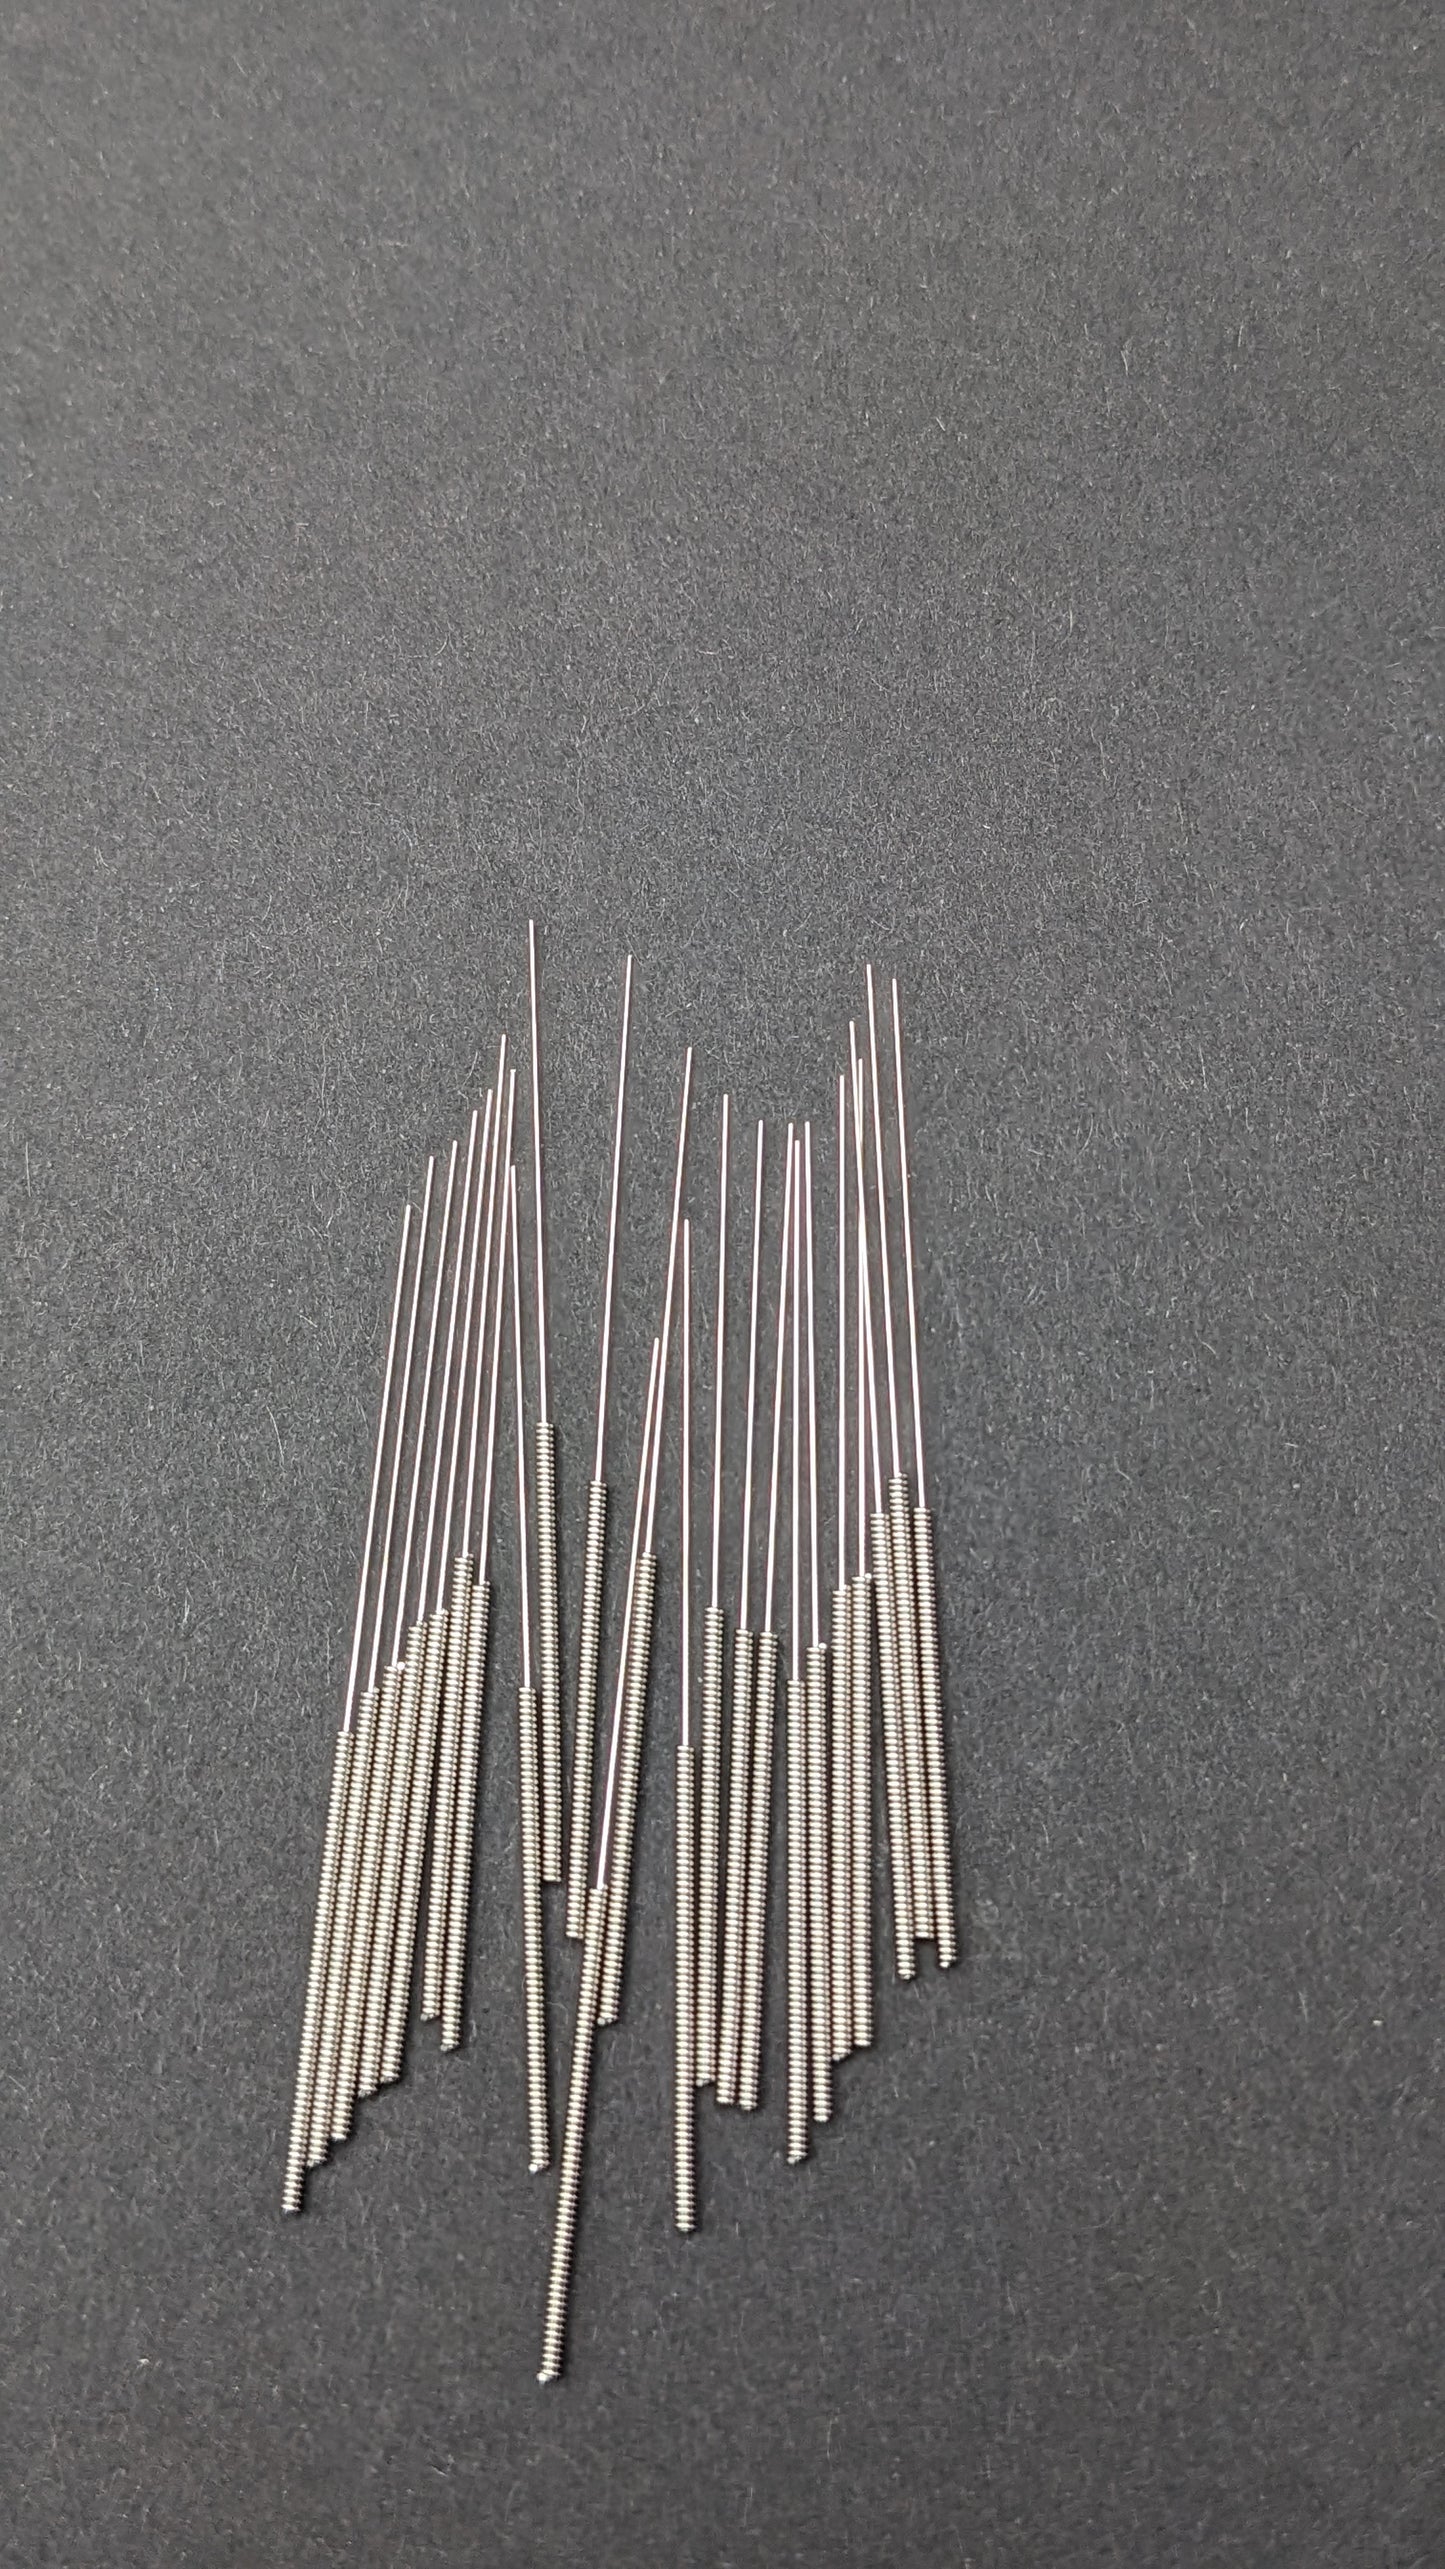 0.35mm Needles